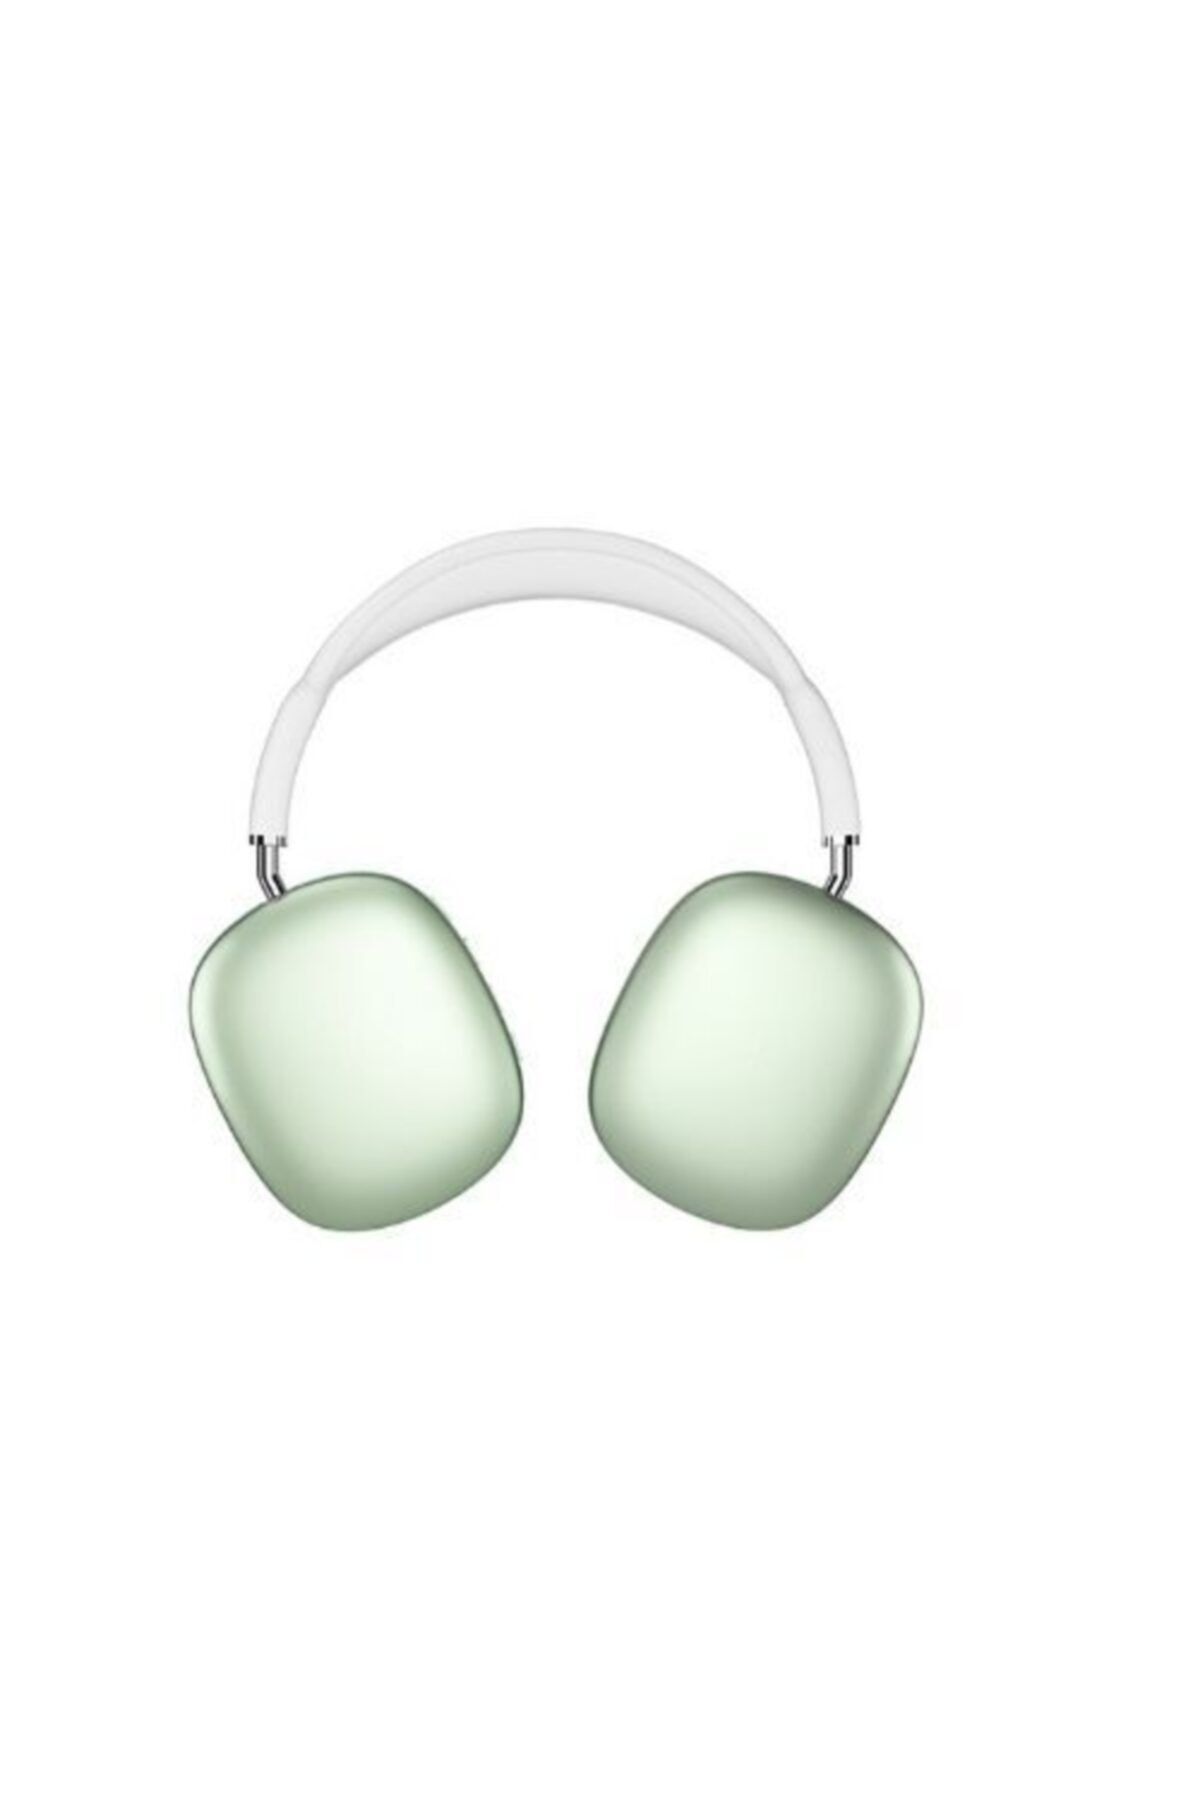 Teknoloji Gelsin Kablosuz Kulaklık Bluetooth 5.0 P9 Air Max Kulaküstü Kulaklık Mikrofonlu Extra Bass Yeşil